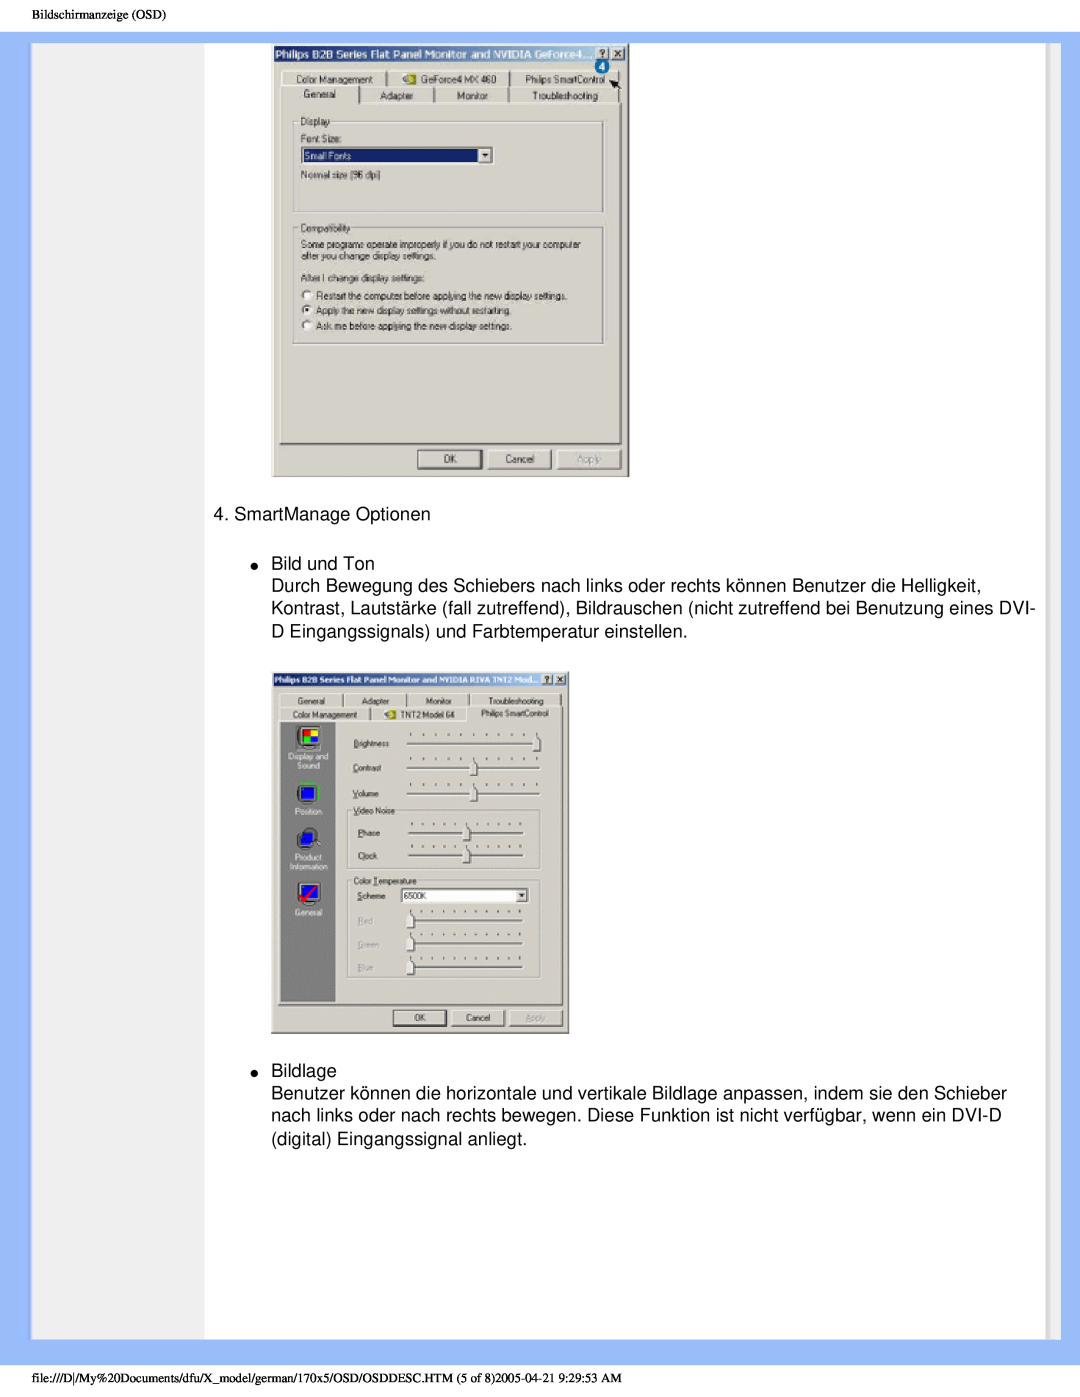 Philips 170X5FB/00, 170X5FB/93 user manual SmartManage Optionen Bild und Ton 